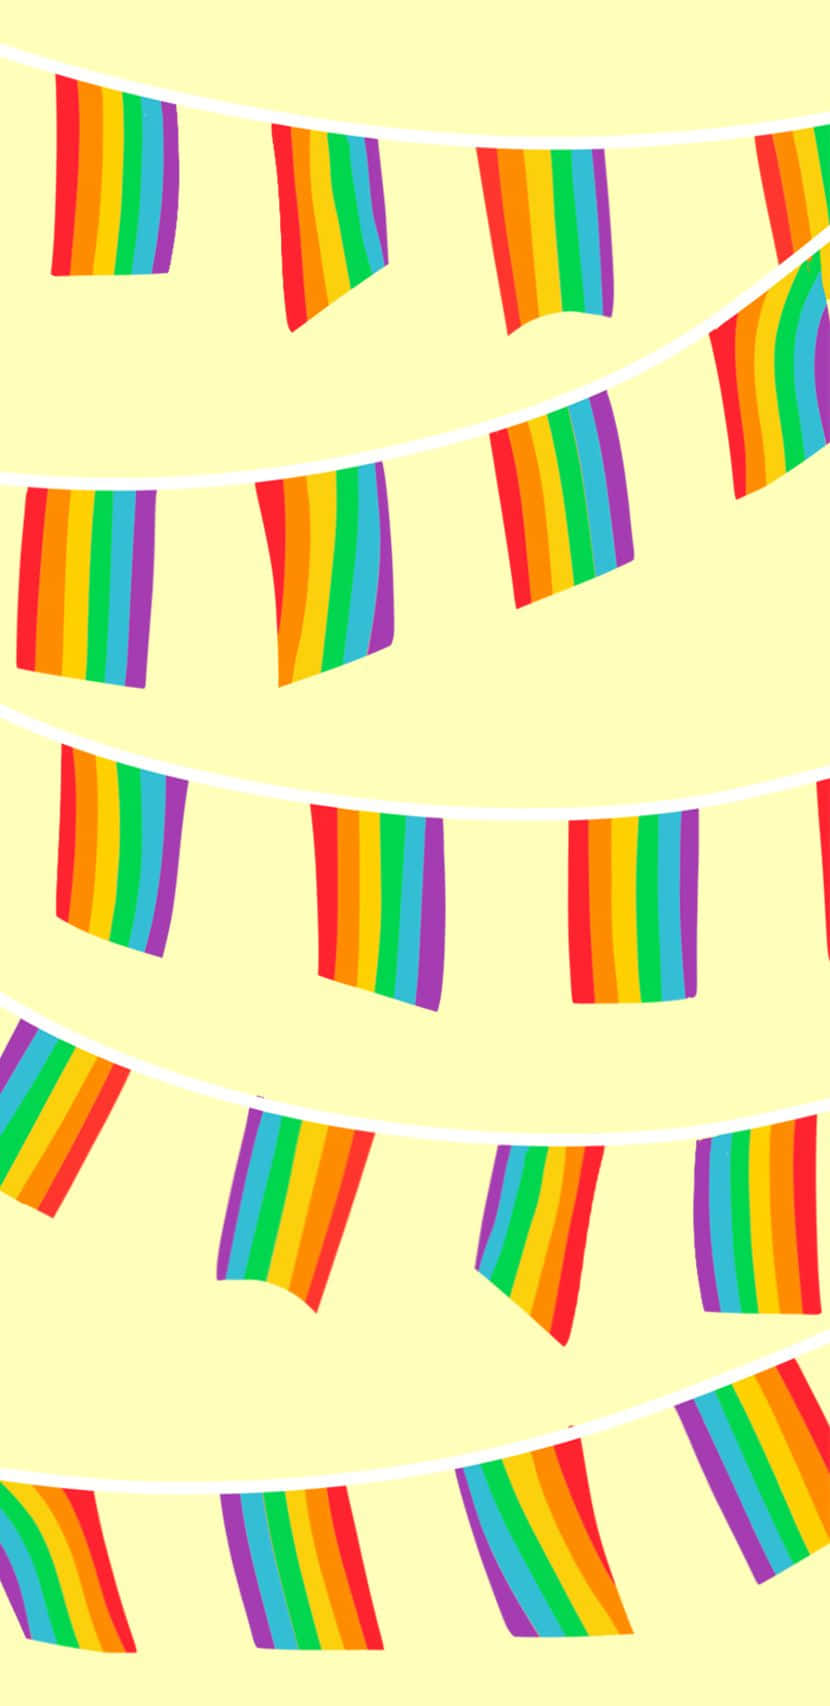 Wallpaperregnbågsflagga-bannerdesign Iphone-bakgrundsbild. Wallpaper